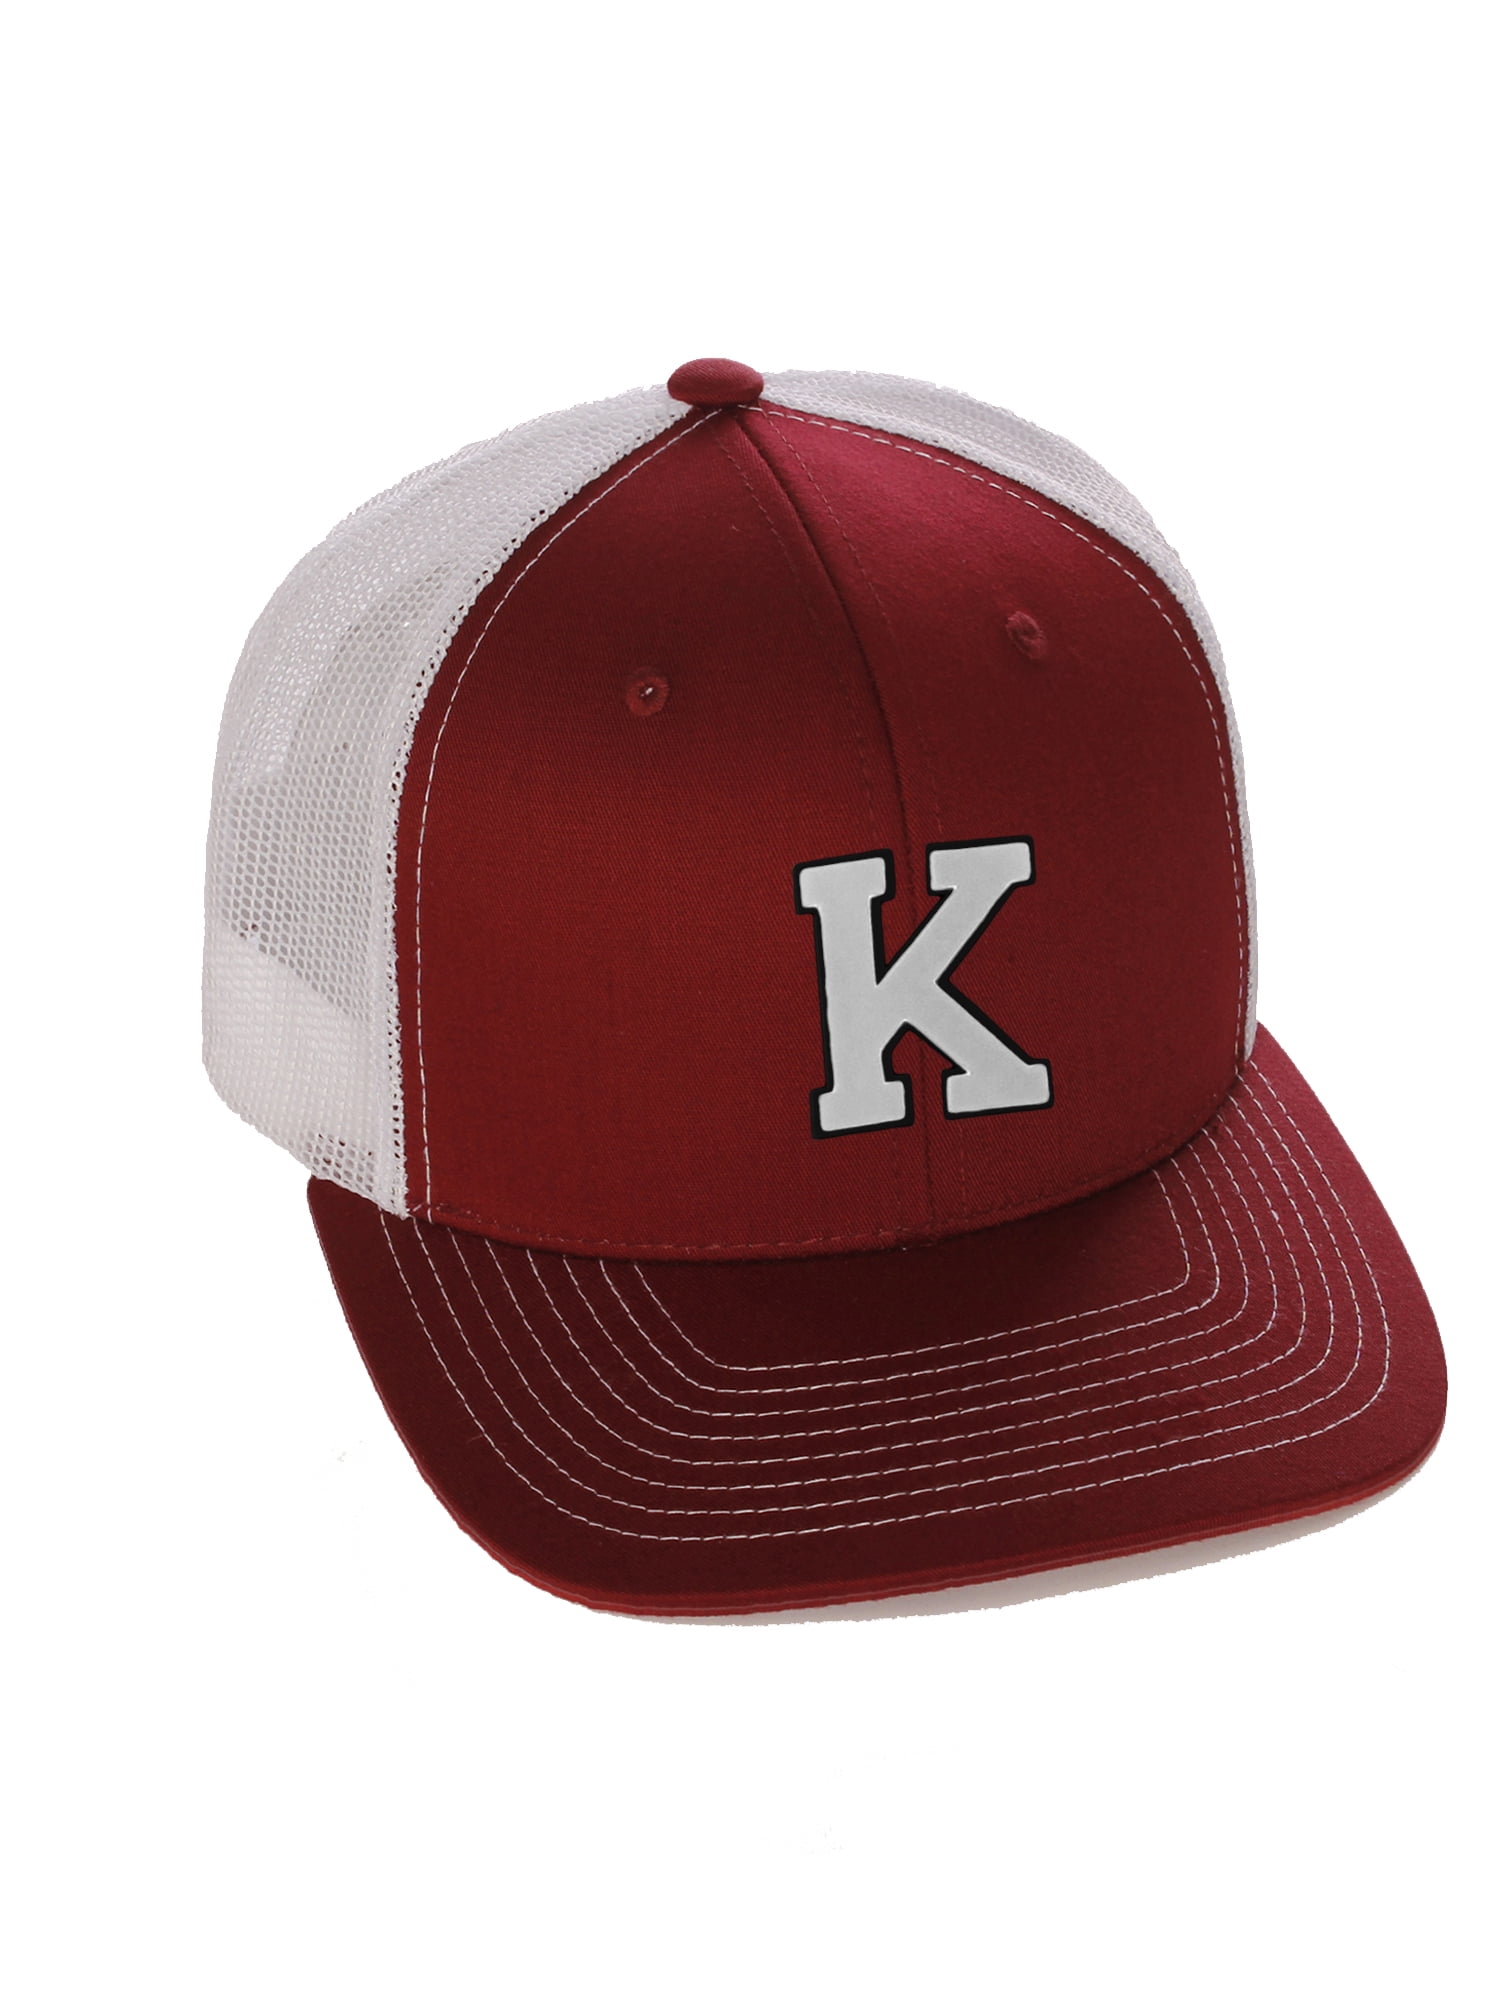 Kansas City Chiefs 3D Snapback Trucker Hat- Charcoal/ Black